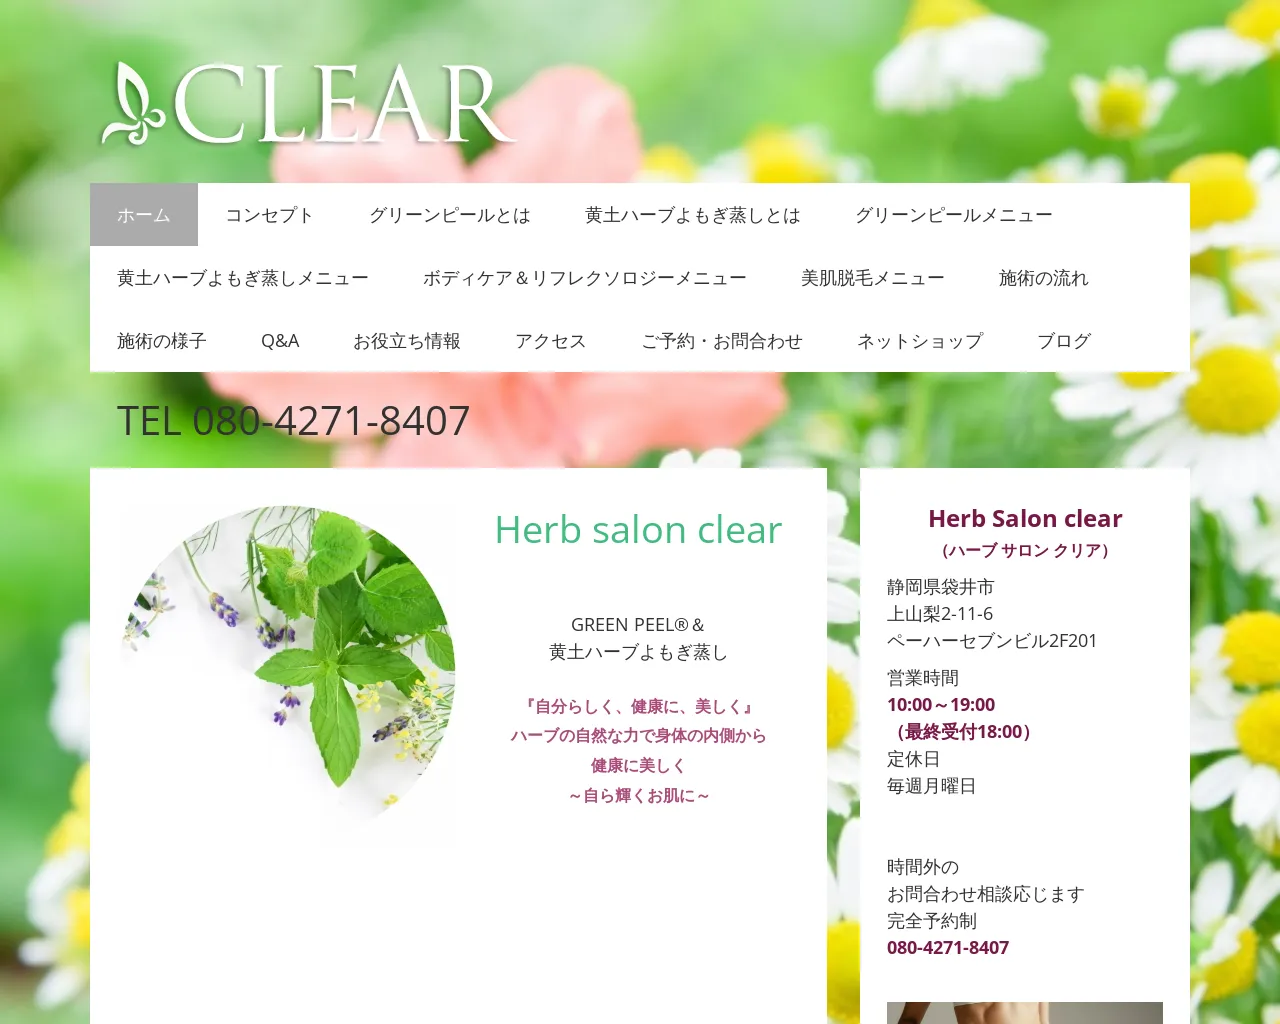 Herb salon clear ハーブサロンクリア site